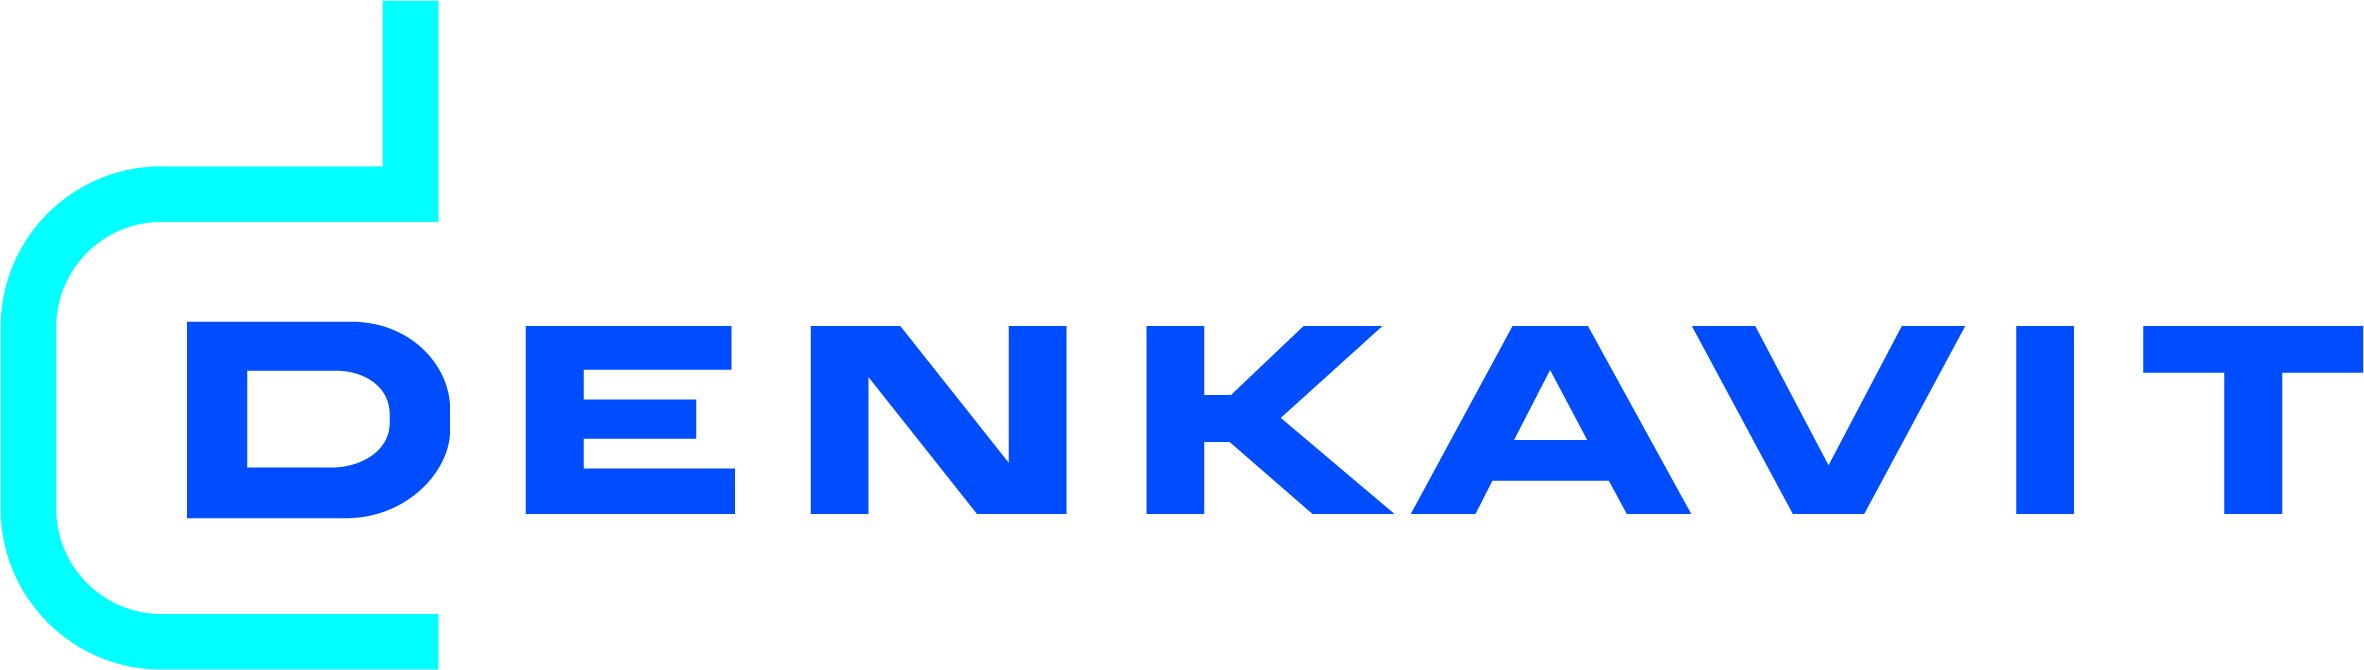 denkavit-logo-300x150.jpg